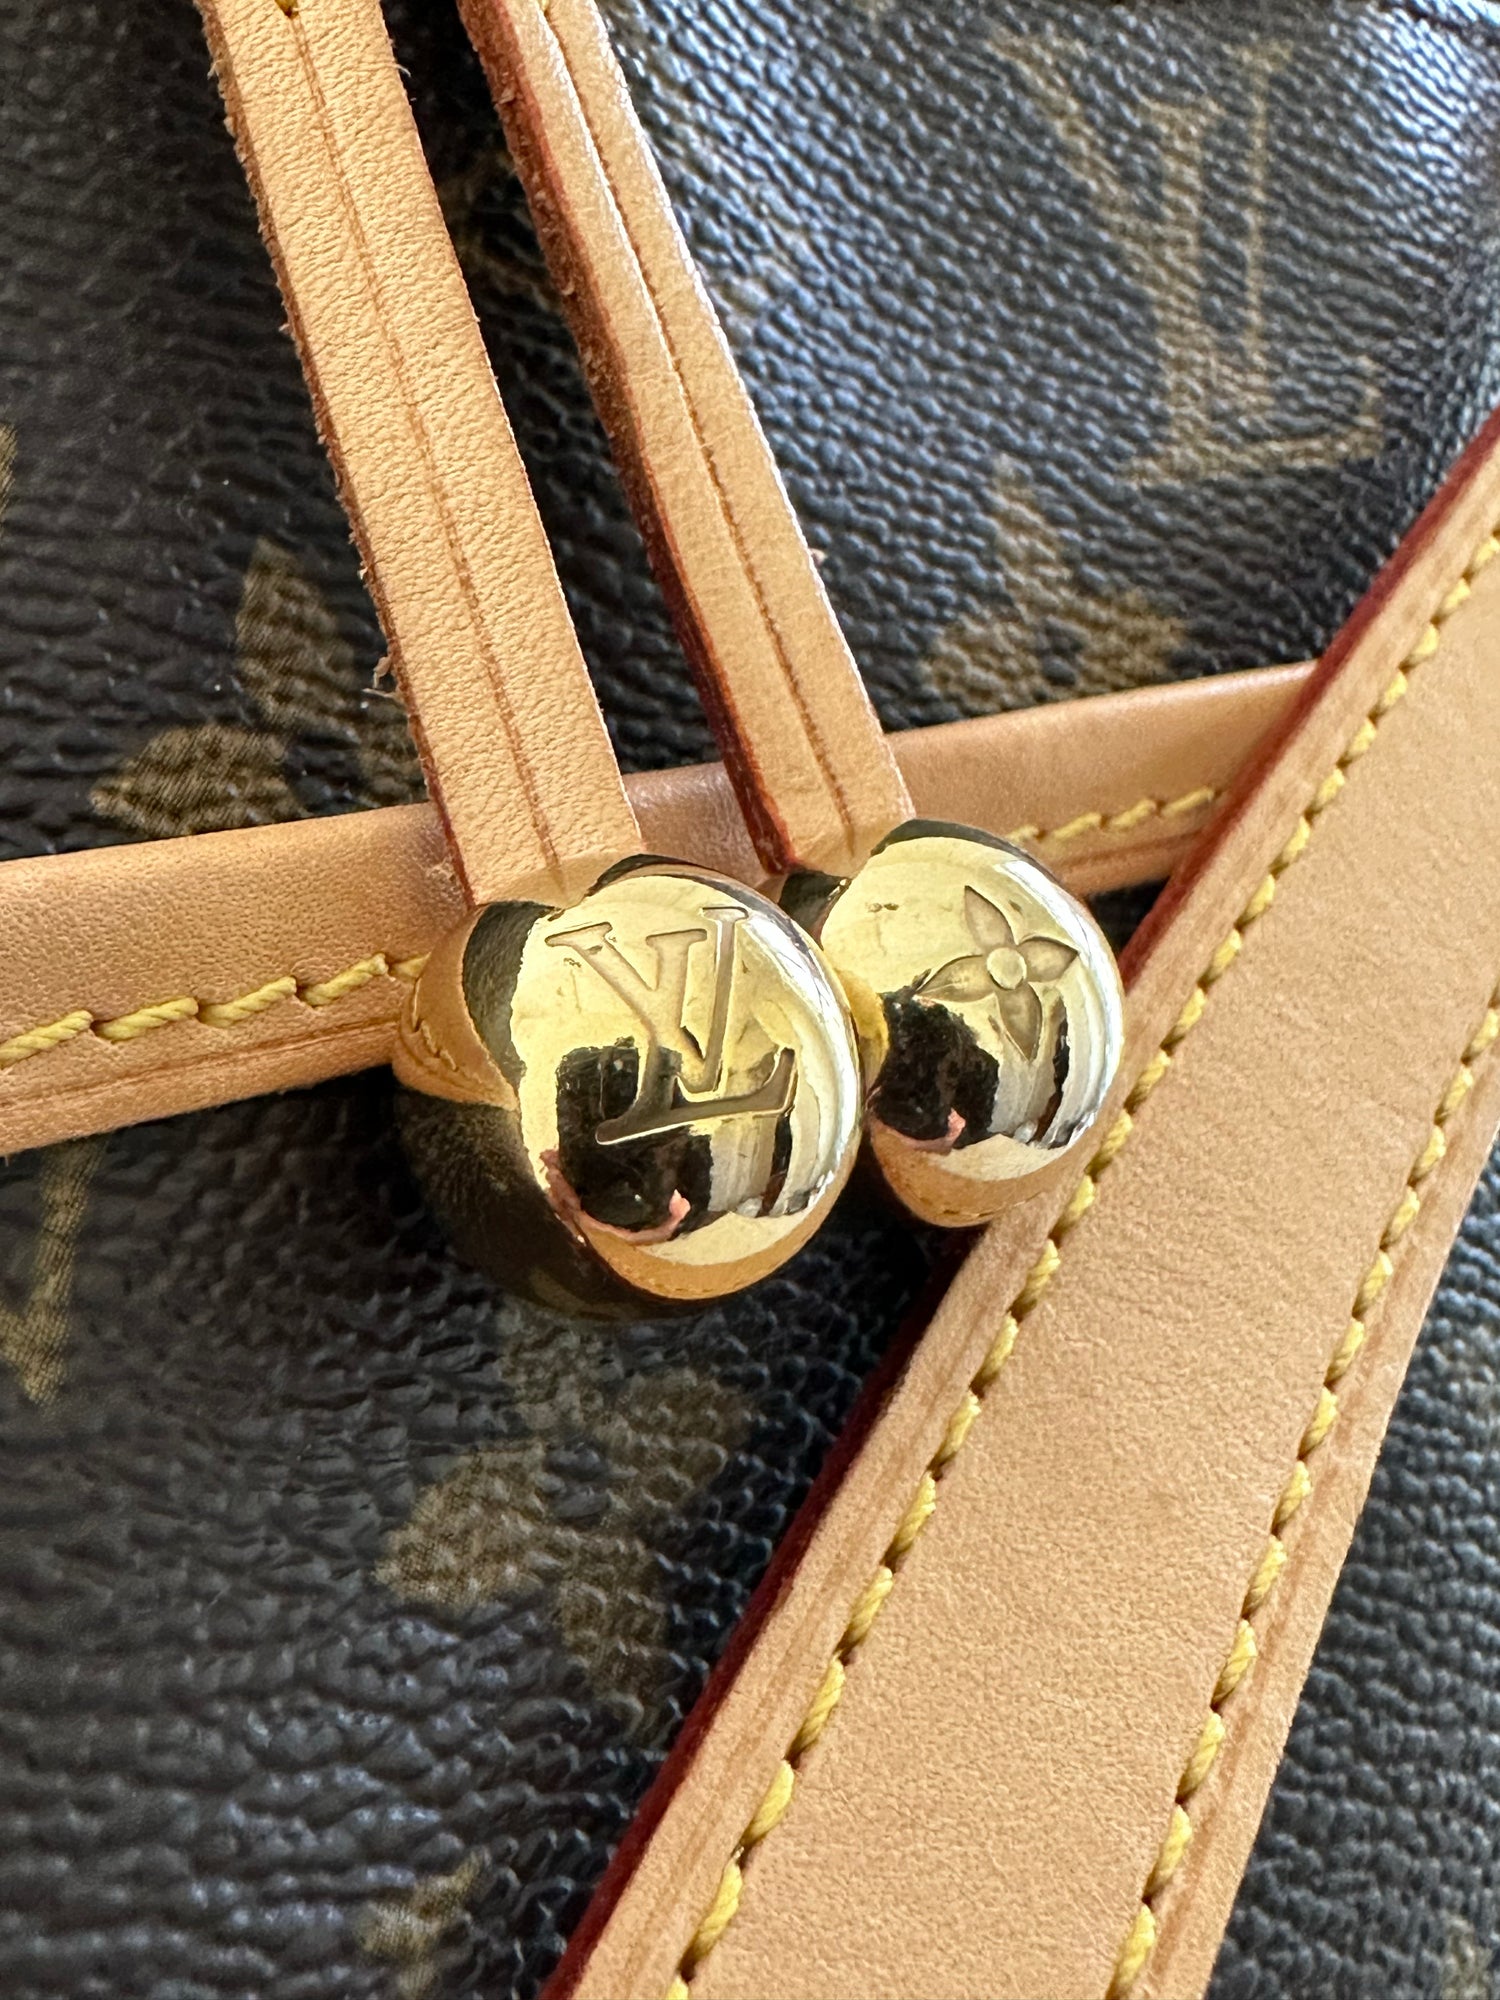 Excellent Louis Vuitton Popincourt Monogram Leather Handbag - Authenticated